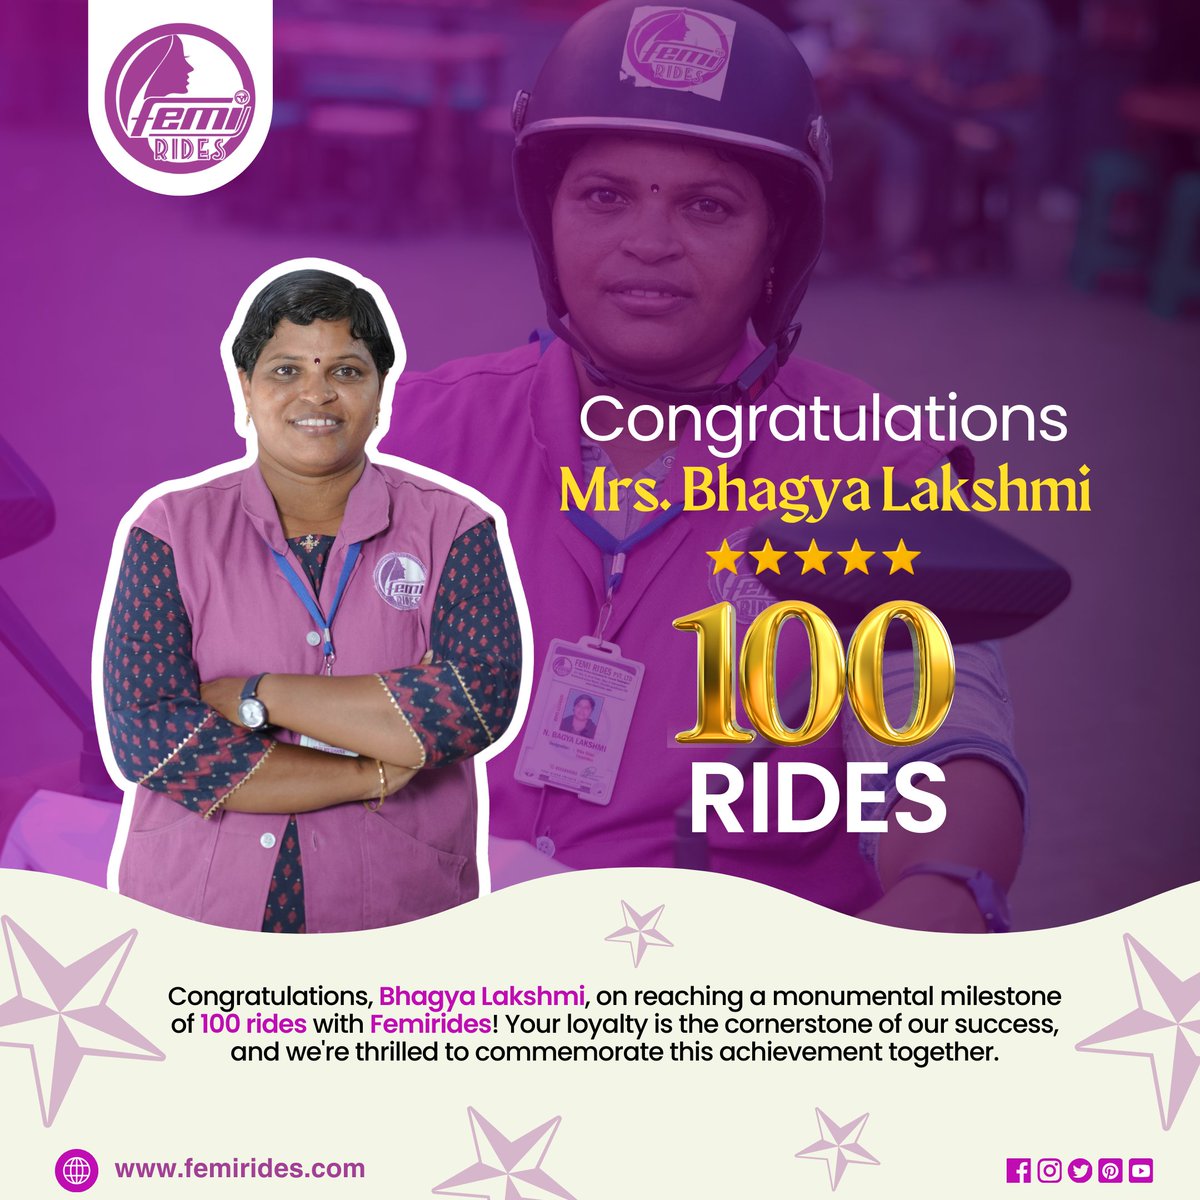 Congratulations Bhagya Lakshmi for completing 100 Rides with FemiRides ❤️

#FemiRides #WomenForWomen #Vizag #Visakhapatnam #AndhraPradesh #biketaxi #femalebiketaxi #womentransportation #simhachalam #WomenEmpowerment #womenonwheels #womenempoweringwomen